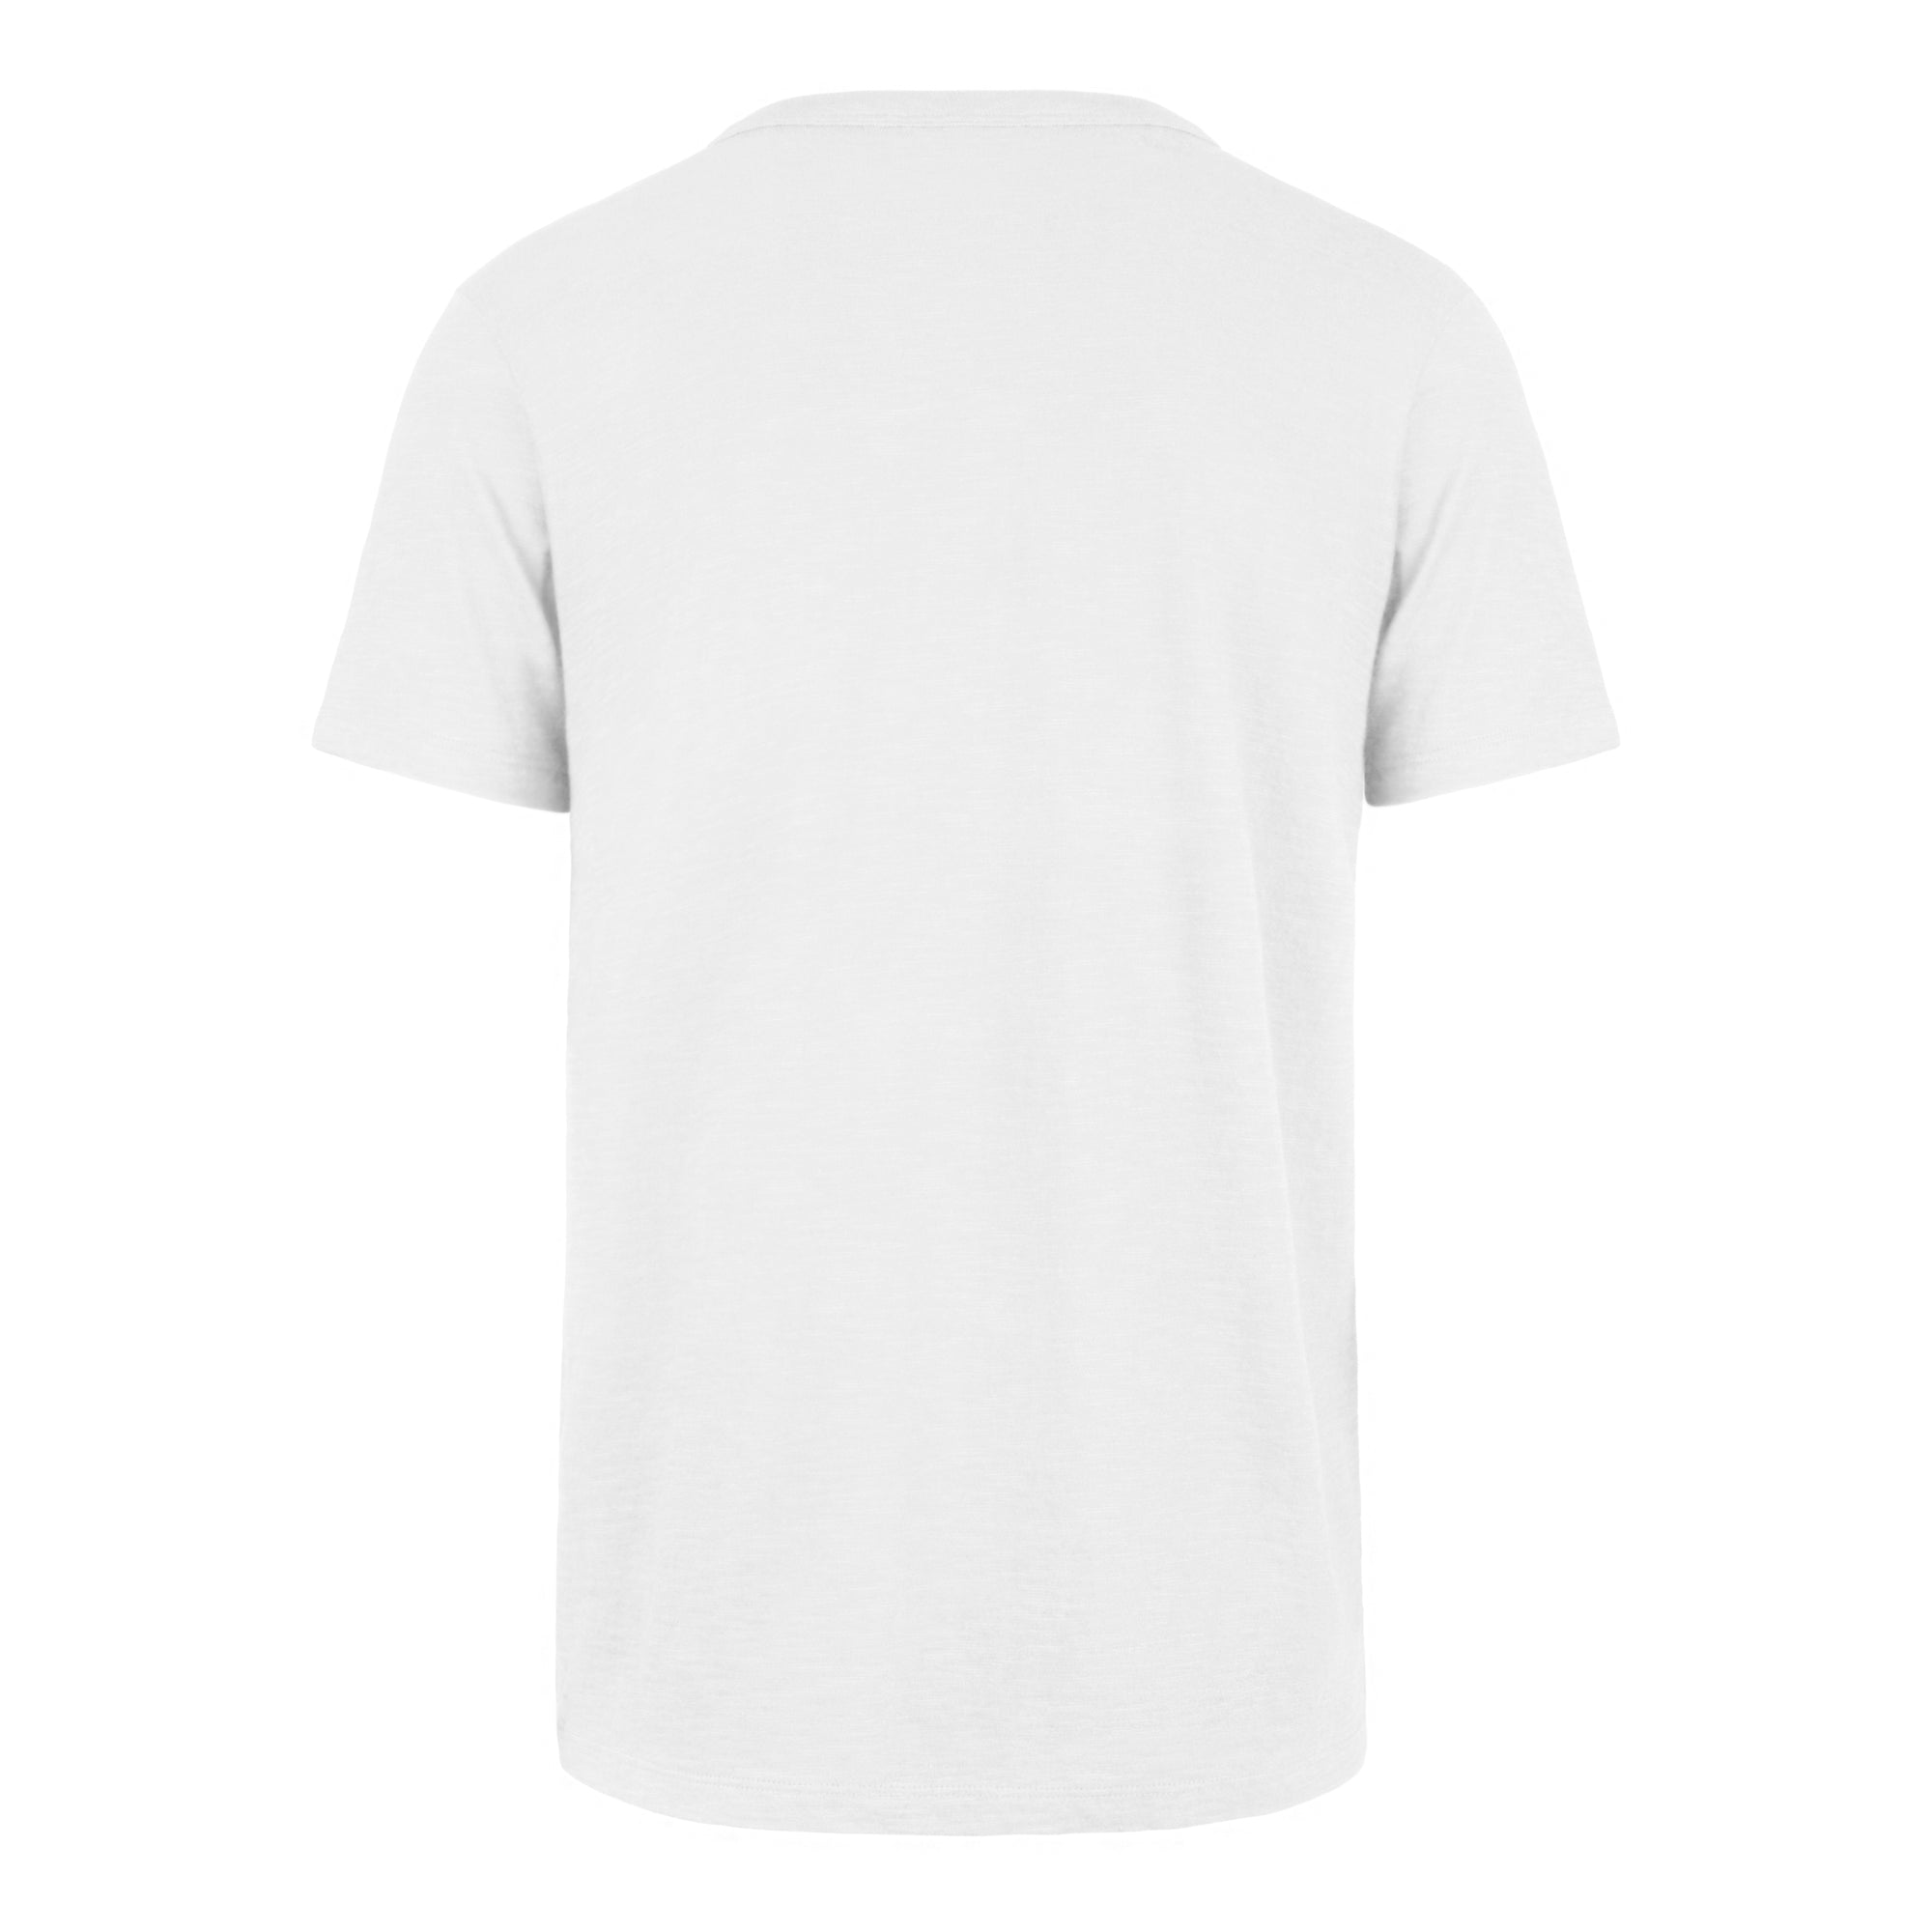 47 Brand 2024 PGA Championship Men's Grit Scrum Short Sleeve T-Shirt in White Wash - Front View